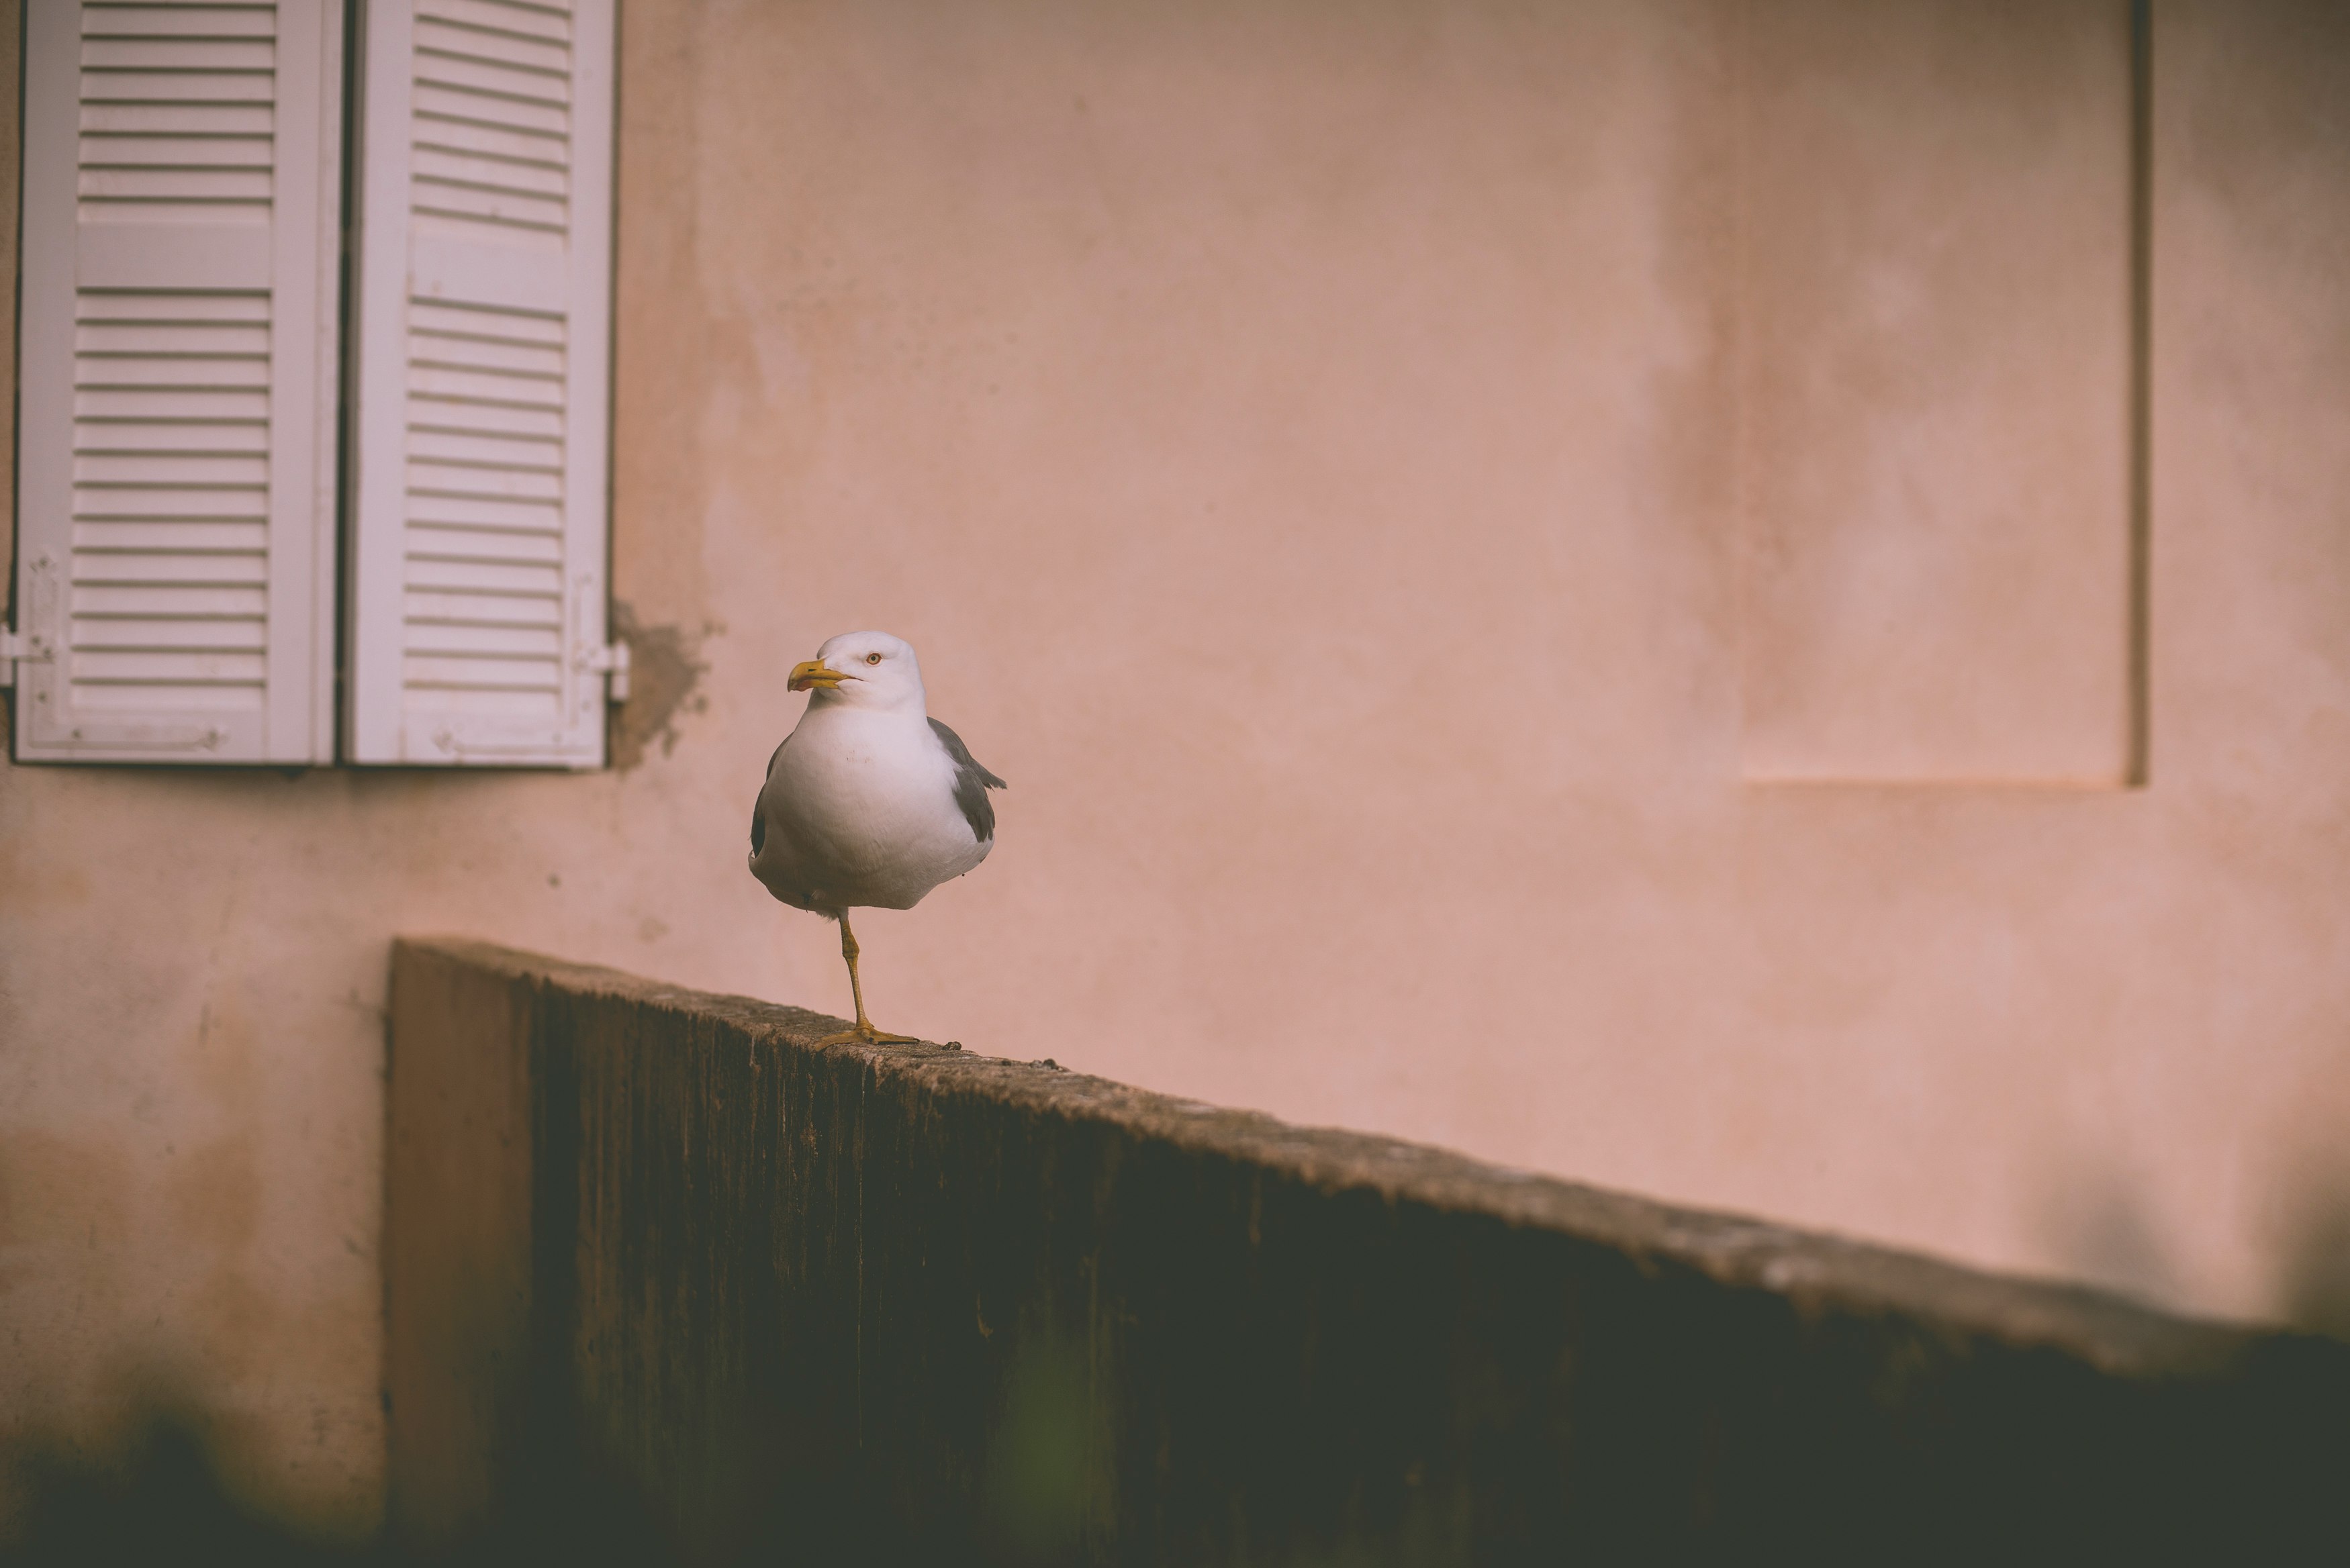 white bird perching on brown wooden fence near window